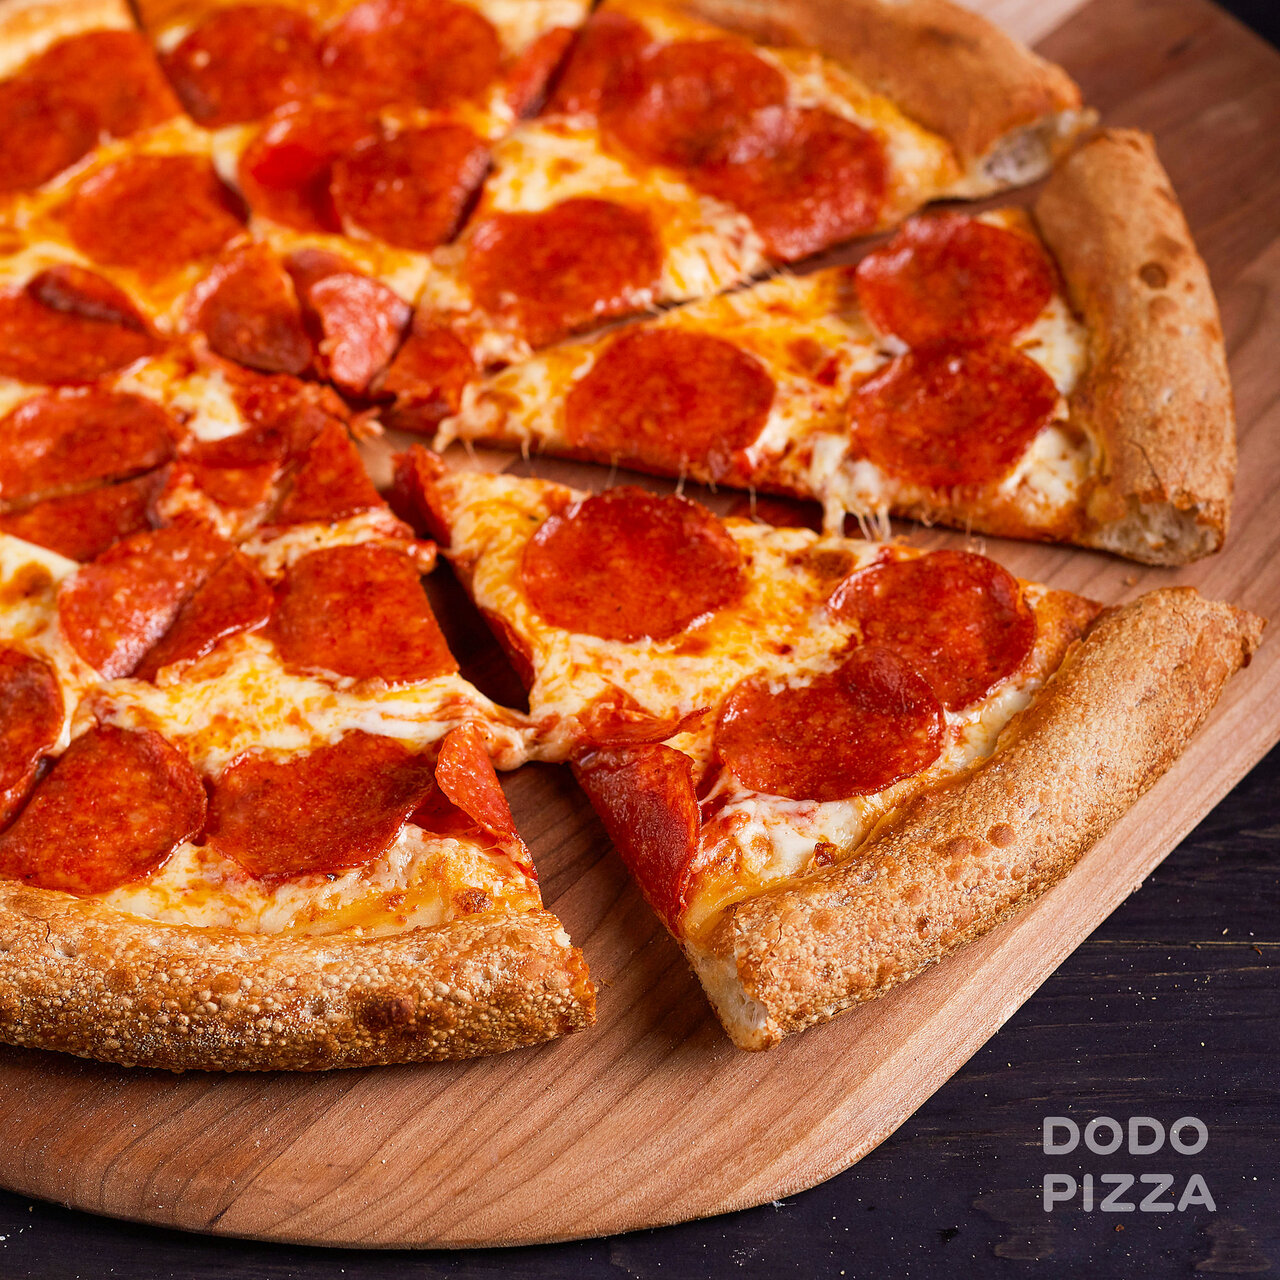 сколько стоит додо пицца пепперони фото 2